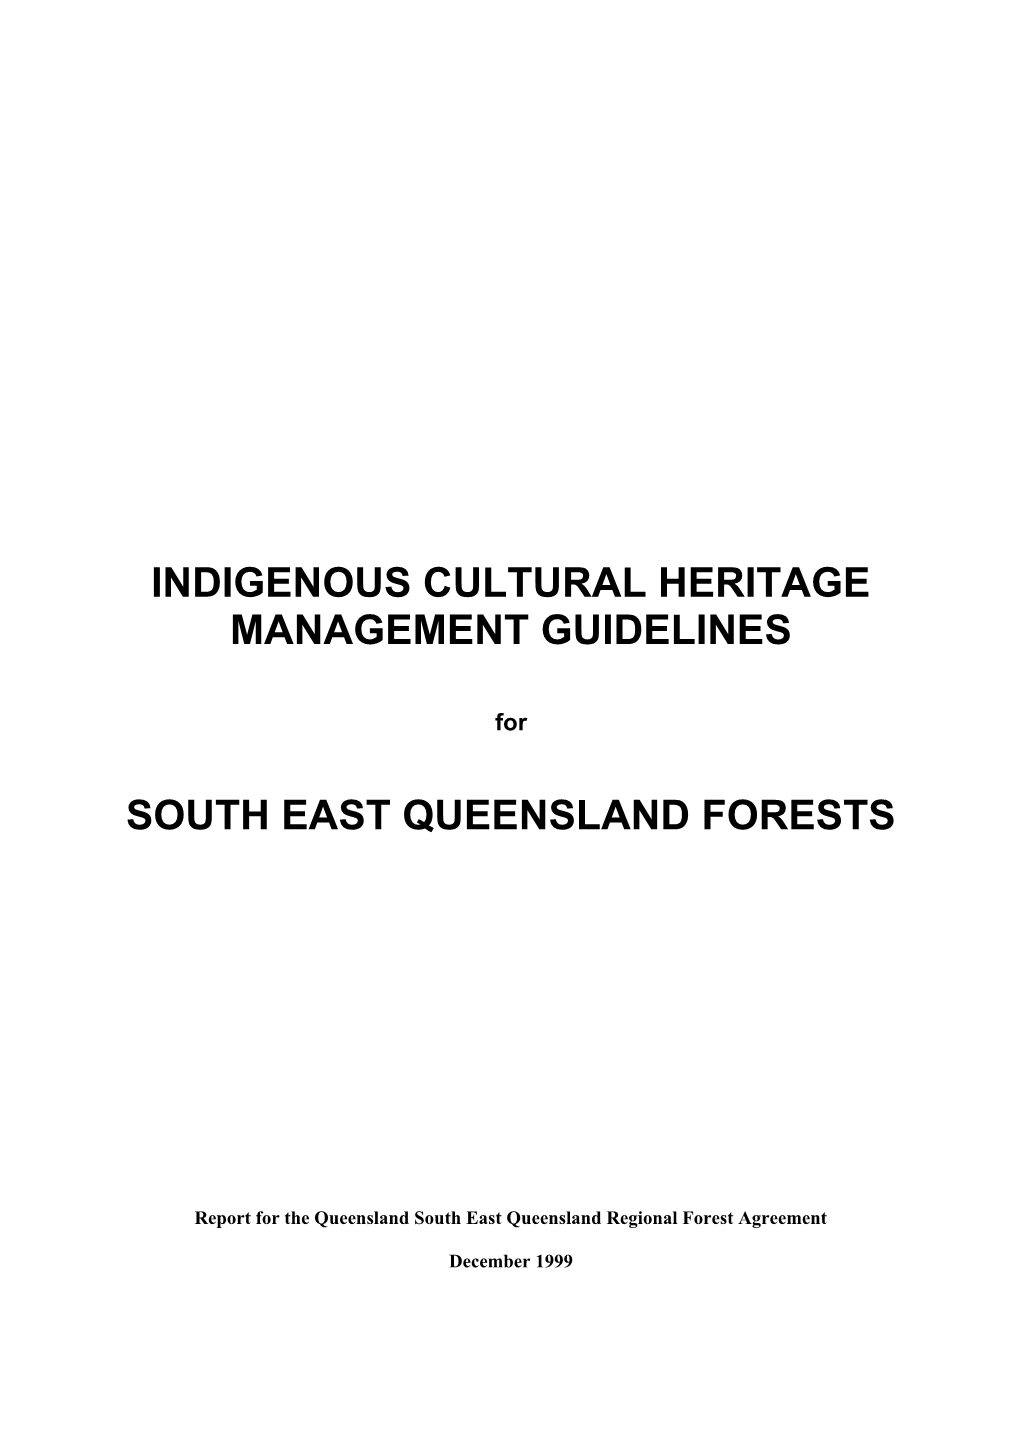 Indigenous Cultural Heritage Management Guidelines